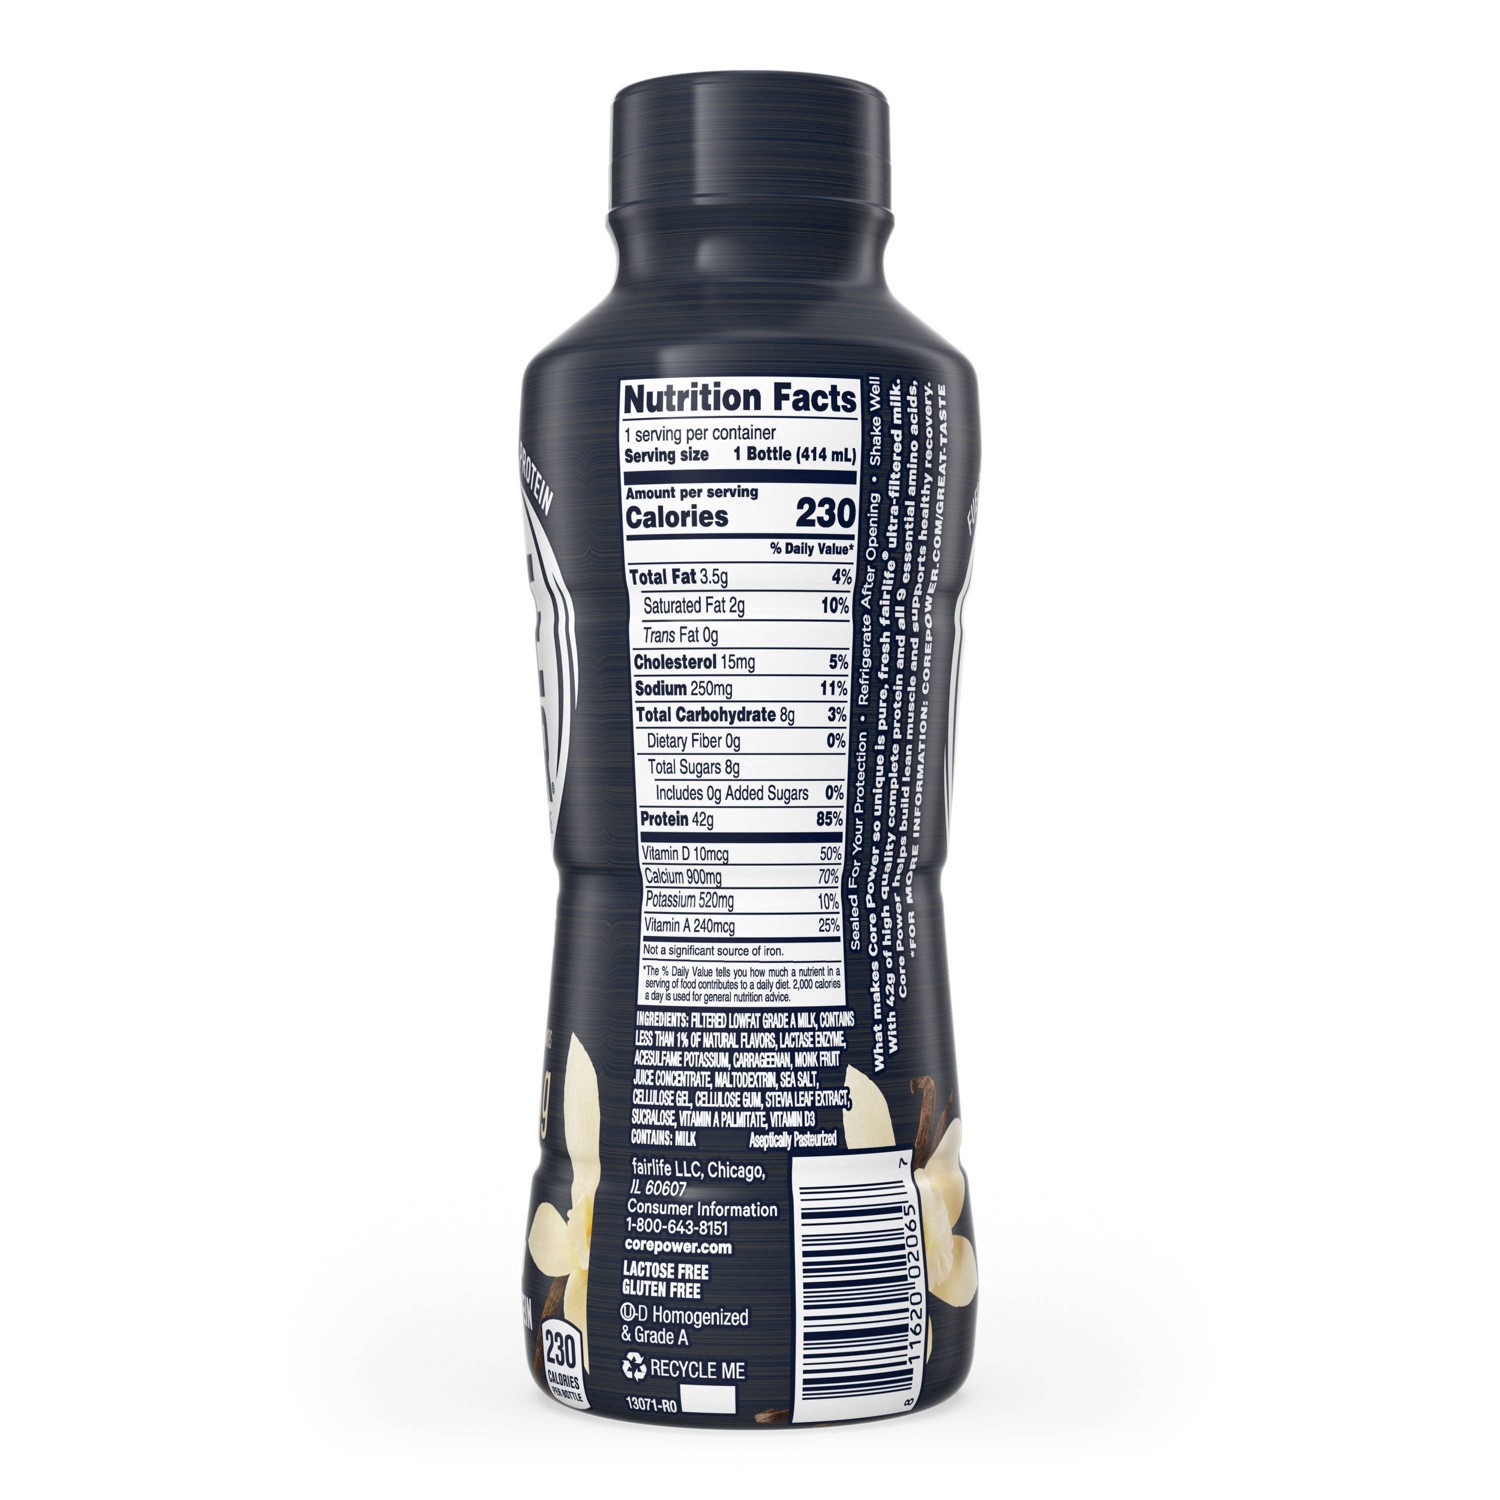 slide 41 of 78, Core Power High Protein Elite Vanilla Milk Shake 14 fl oz, 14 fl oz